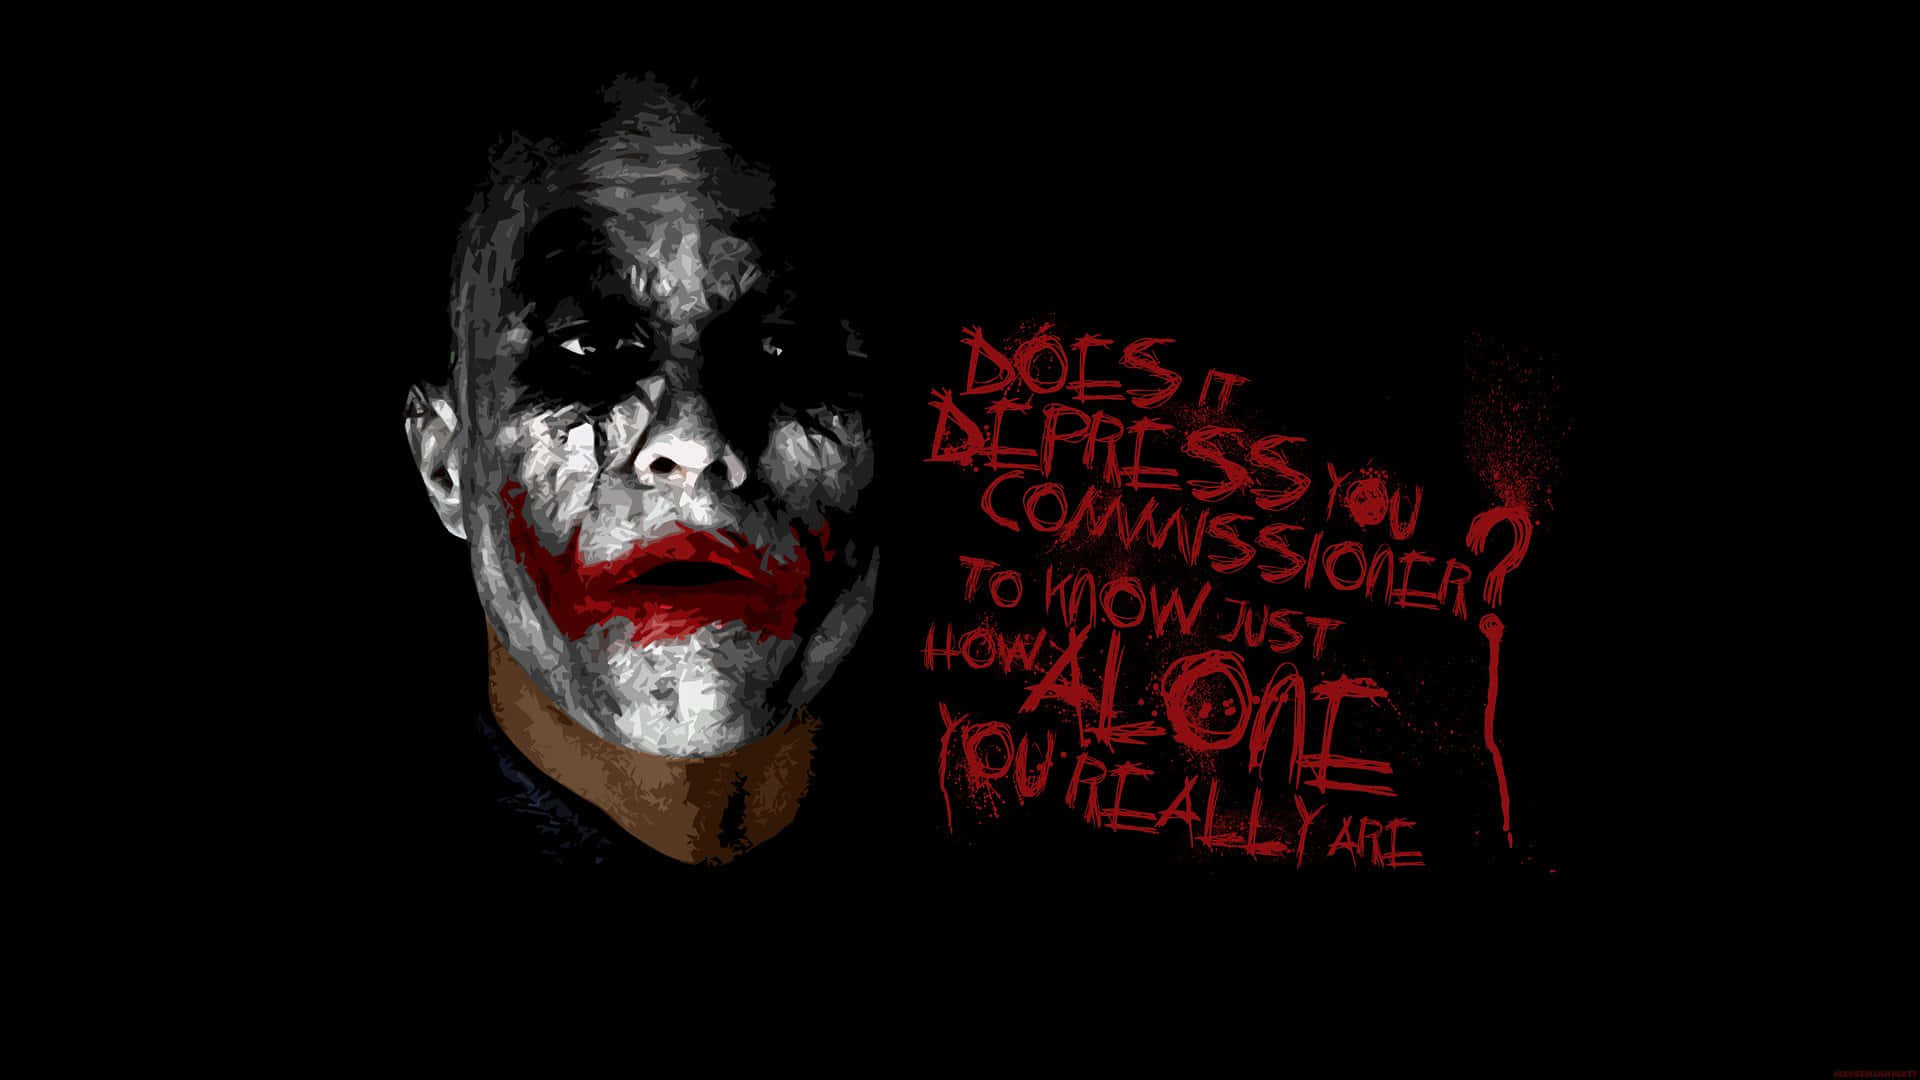 The Dark Joker Reigns in this Intense Artwork Wallpaper